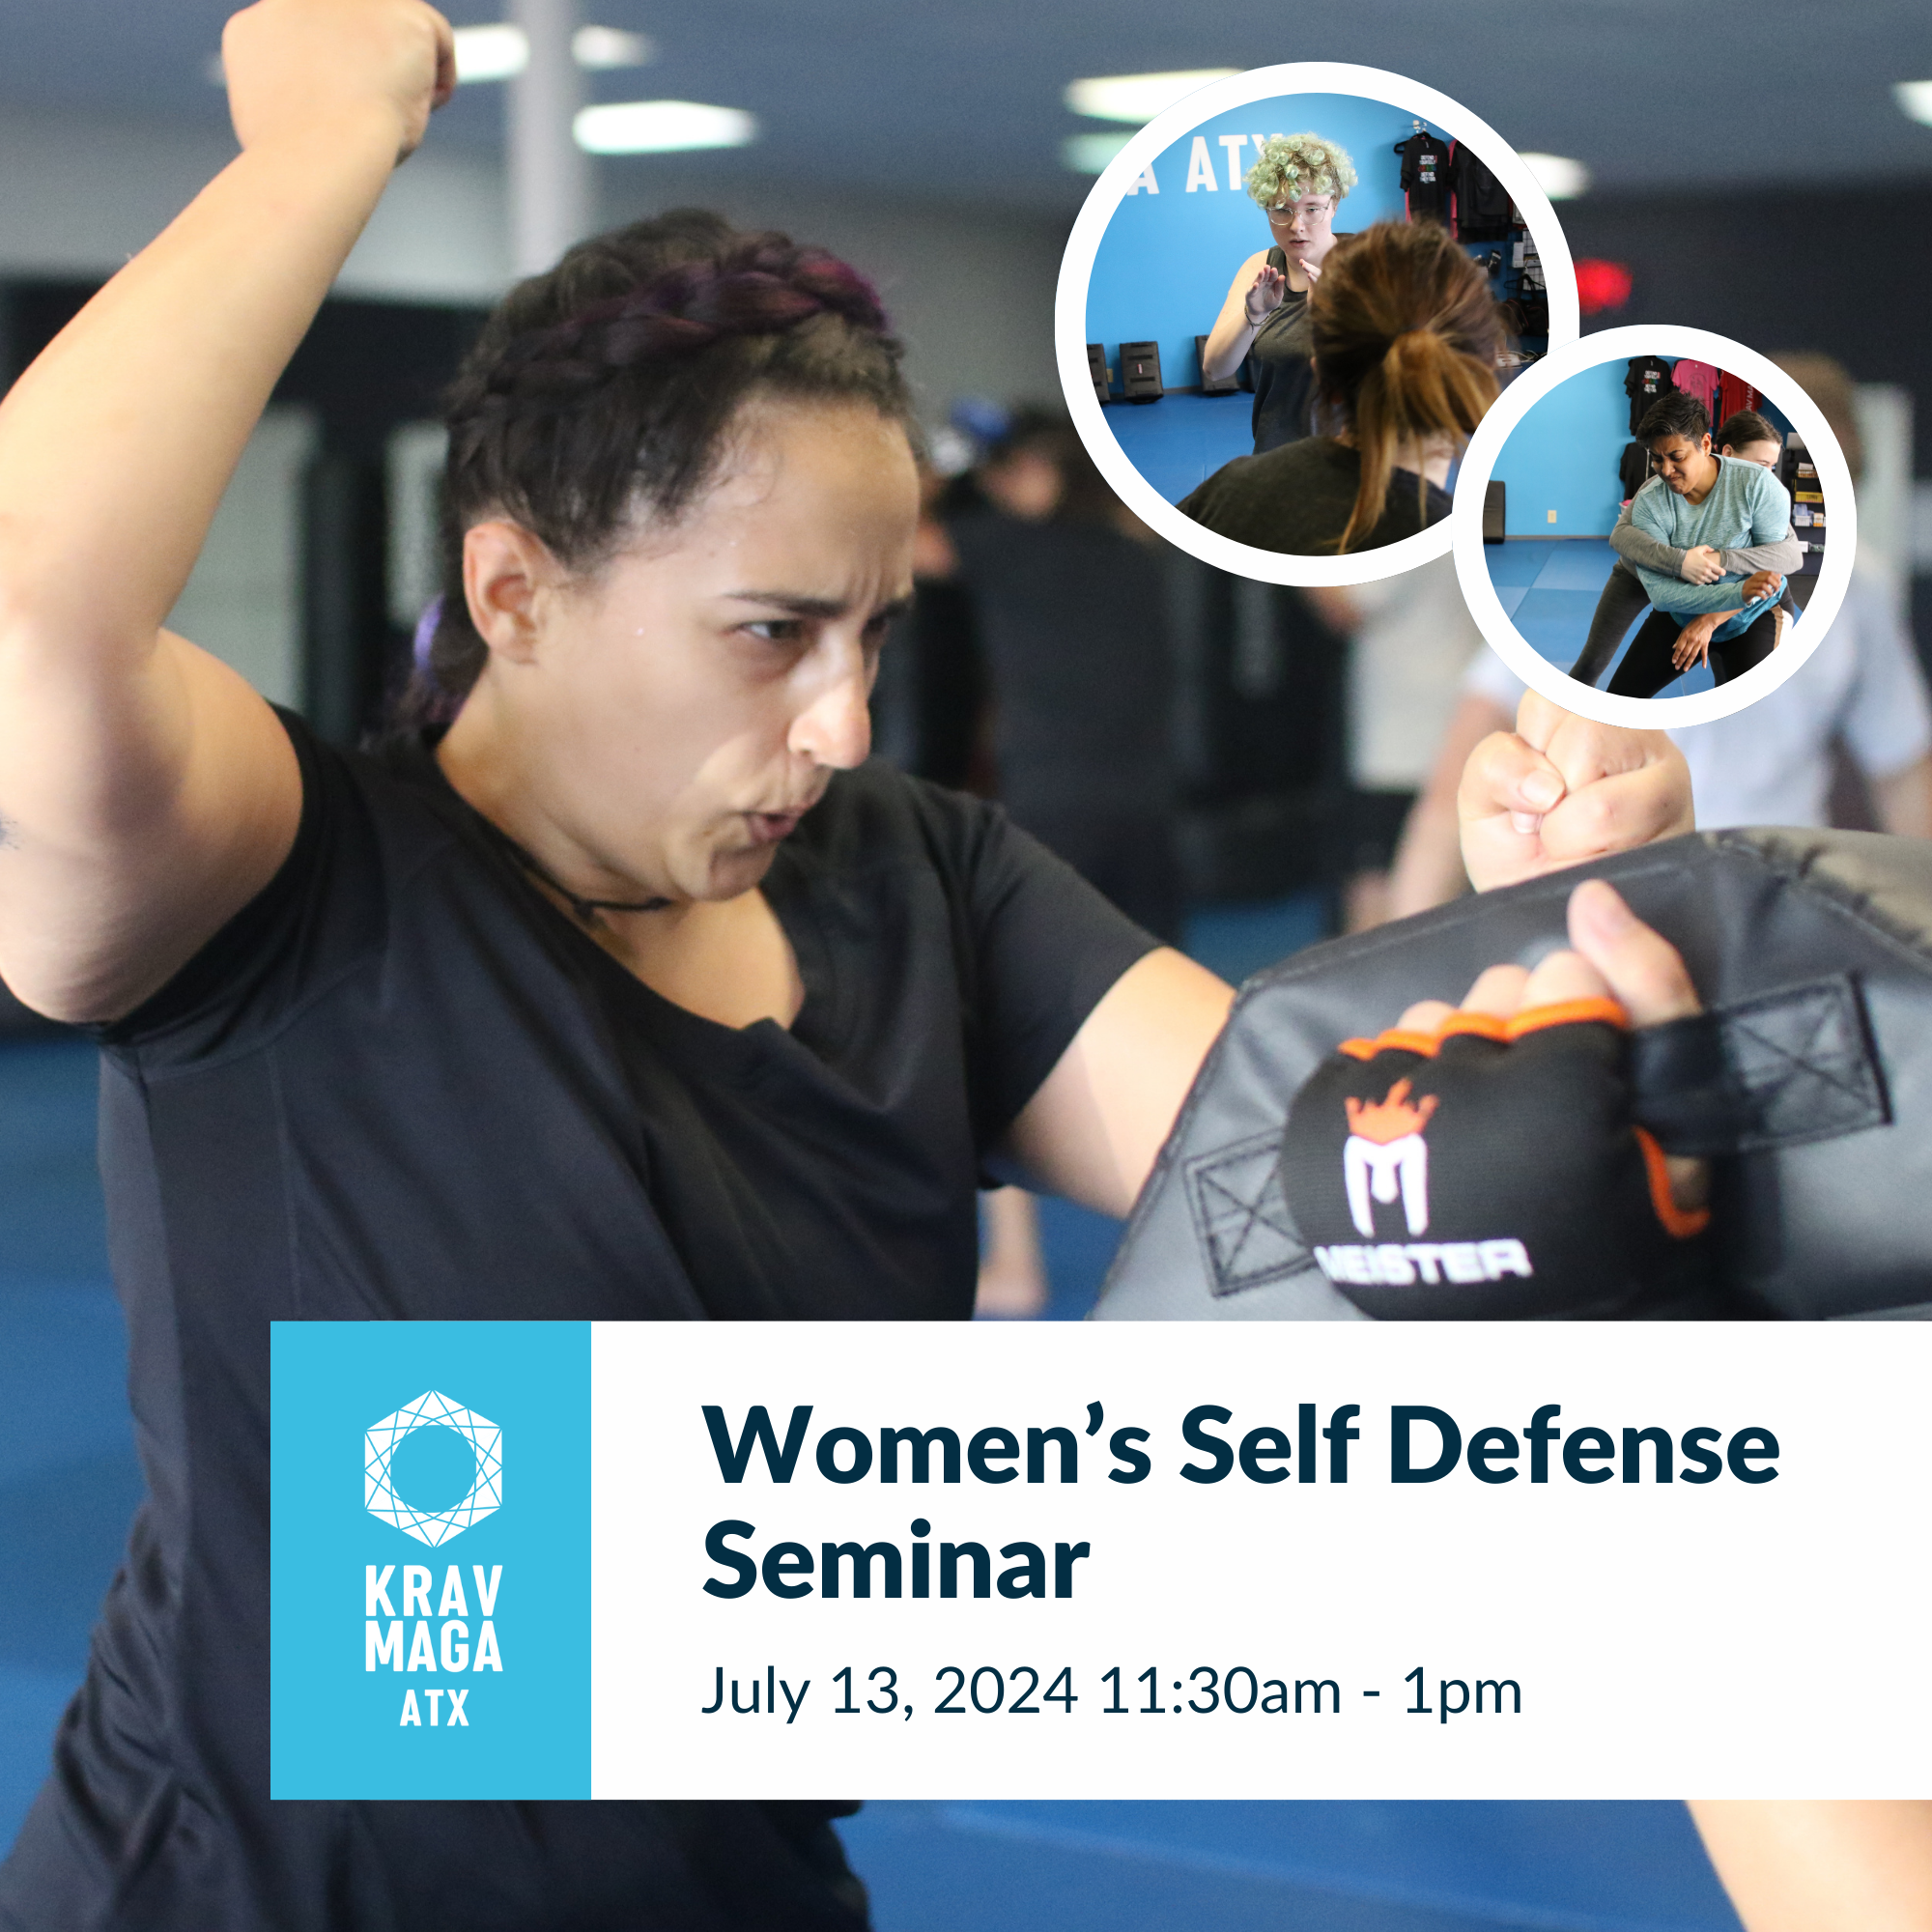 Women's Self Defense Seminar July 13, 2024 11:30am to 1pm